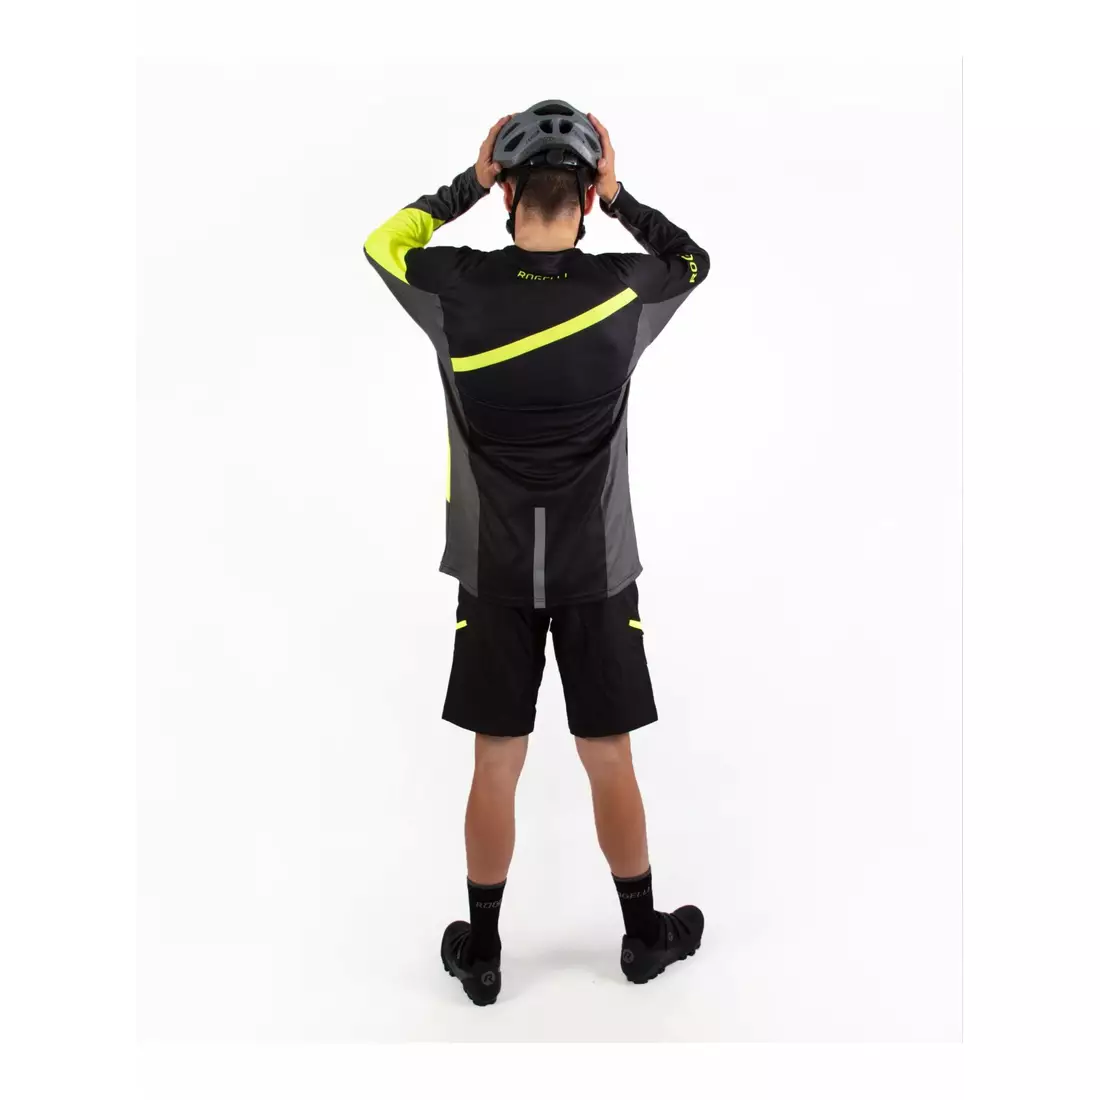 ROGELLI ADVENTURE tricou de ciclism masculin MTB cu maneca lunga, negru-gri-fluor 060.110